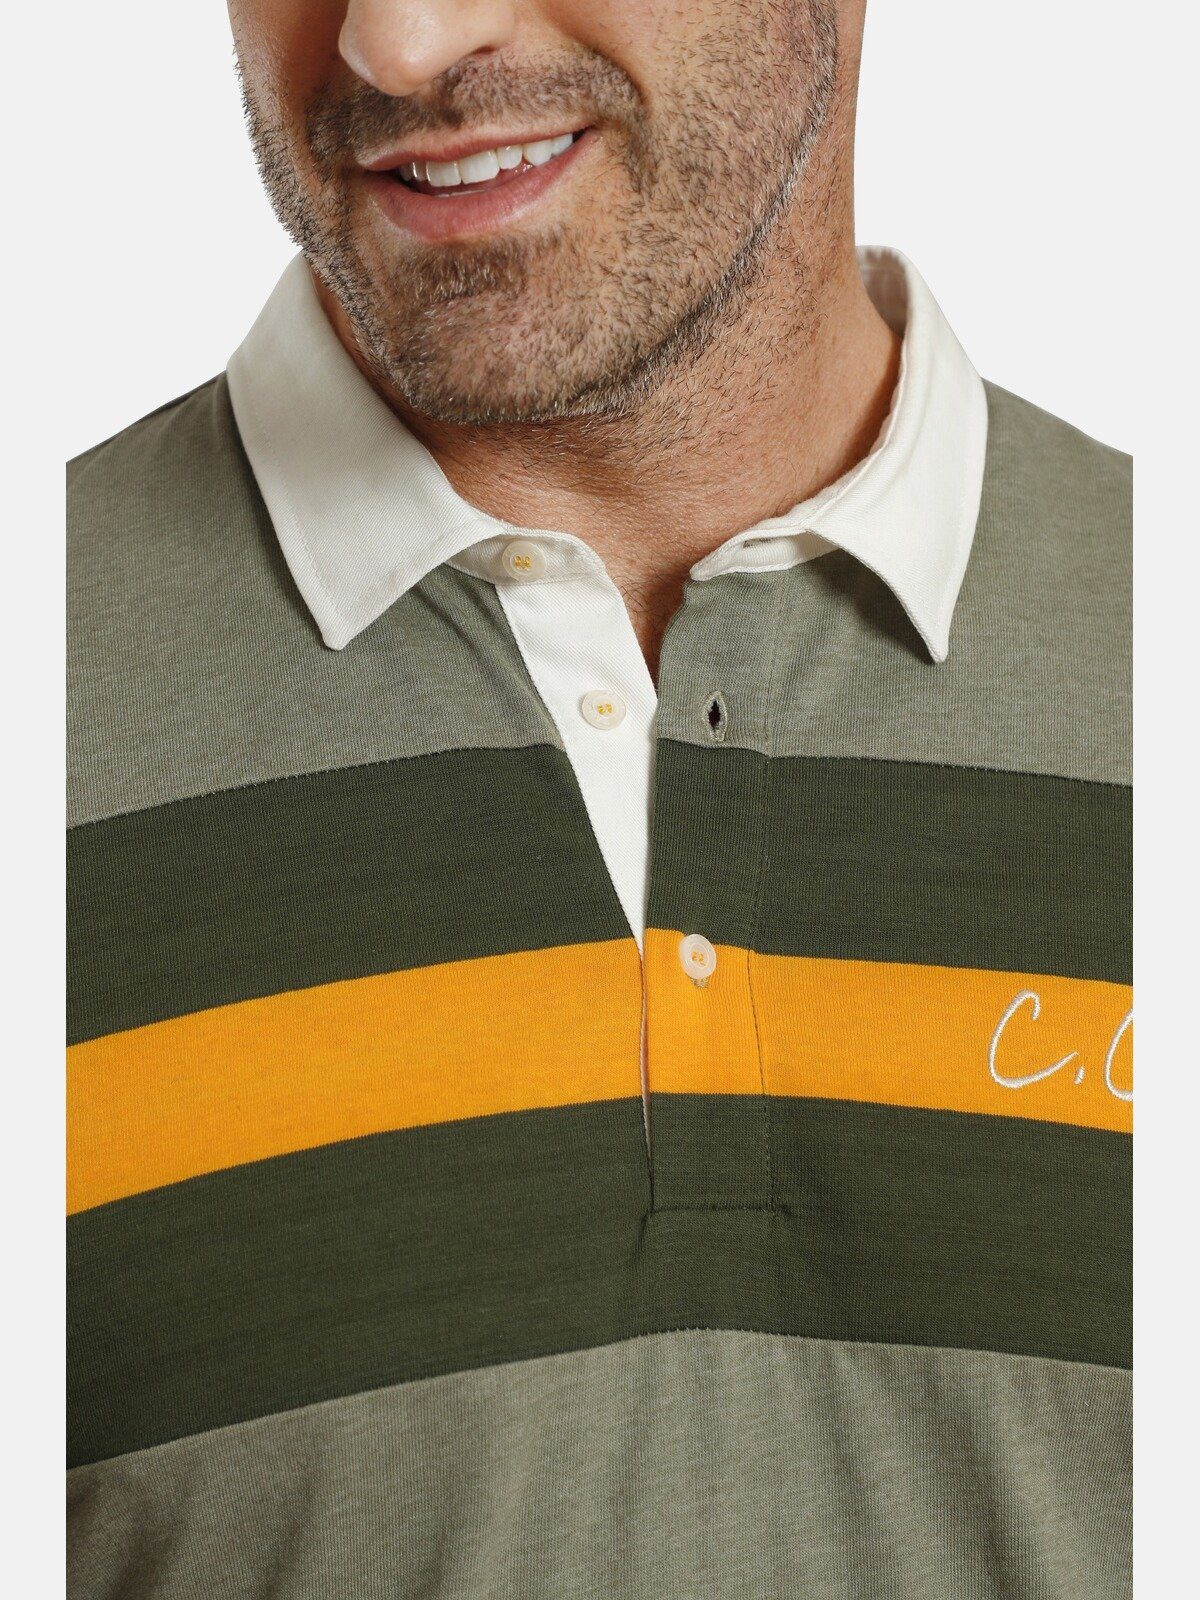 in GARWY stylisch Colby EARL Charles Colour-Blocking Sweatshirt